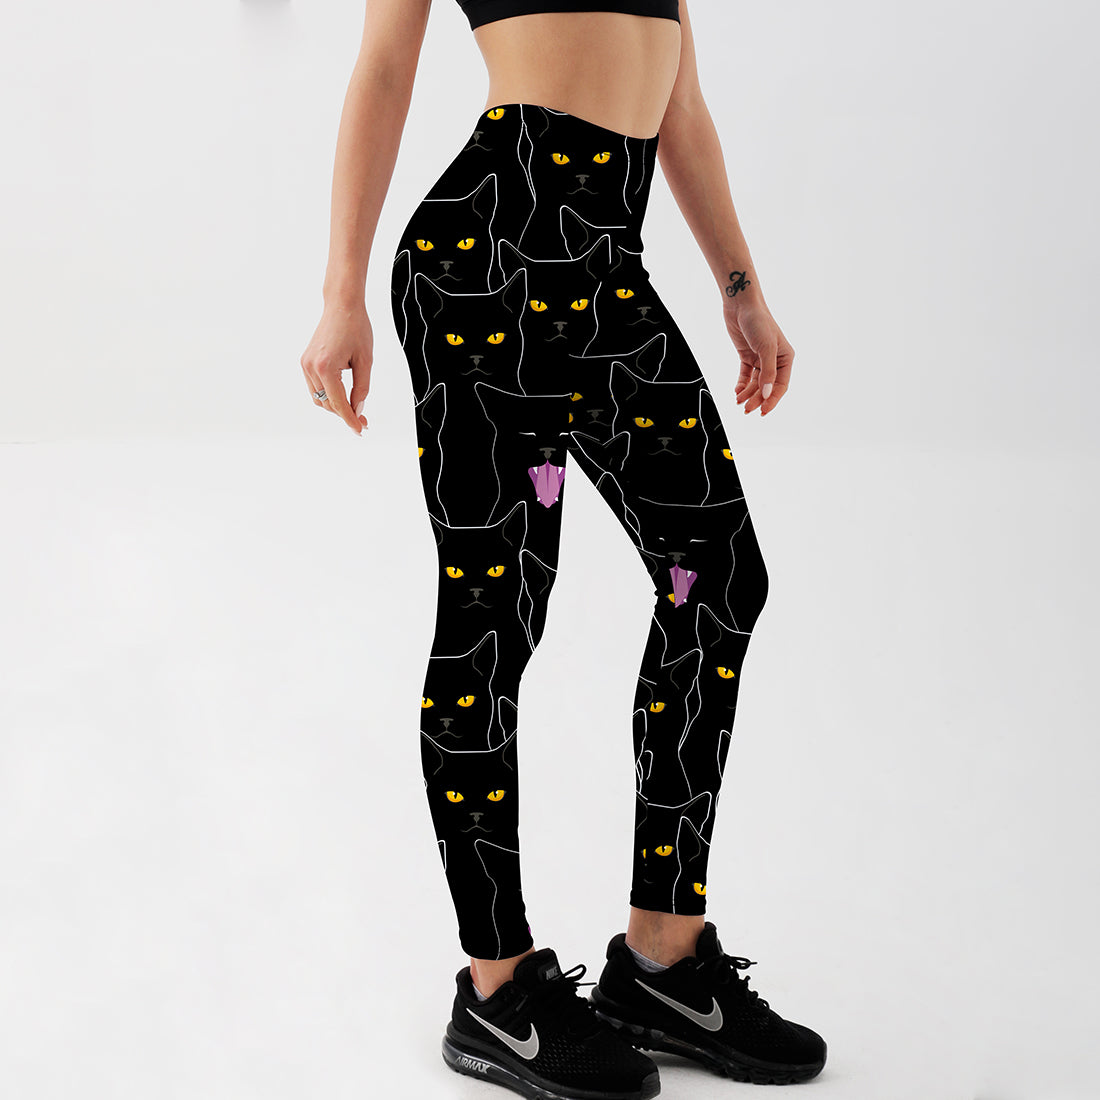 Printed Leggings & Graphic Yoga Pants, Trendy Activewear for Women -   Canada